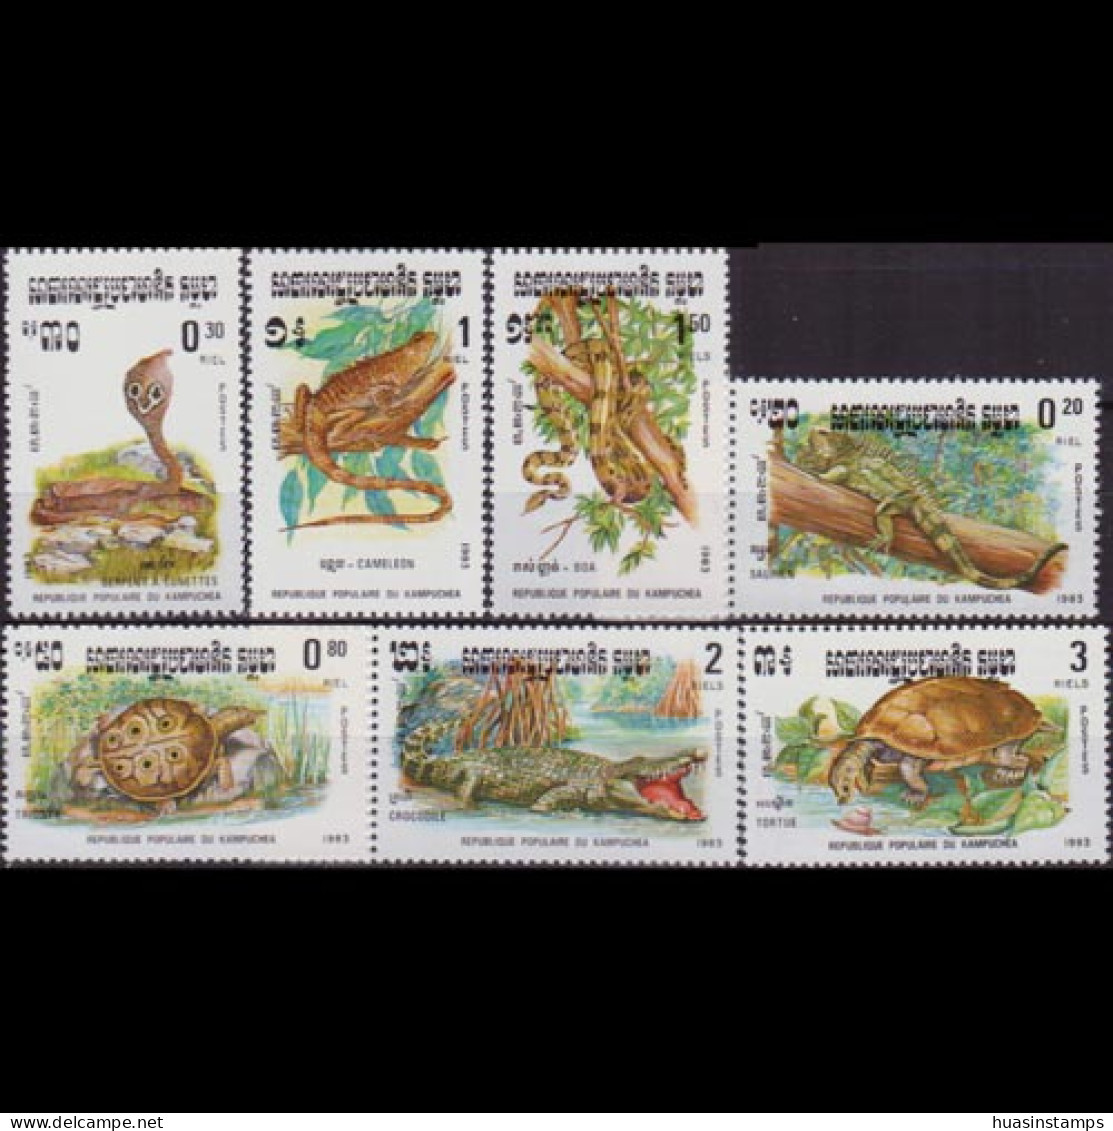 CAMBODIA 1984 - Scott# 420-6 Reptiles Set Of 7 MNH - Cambodia